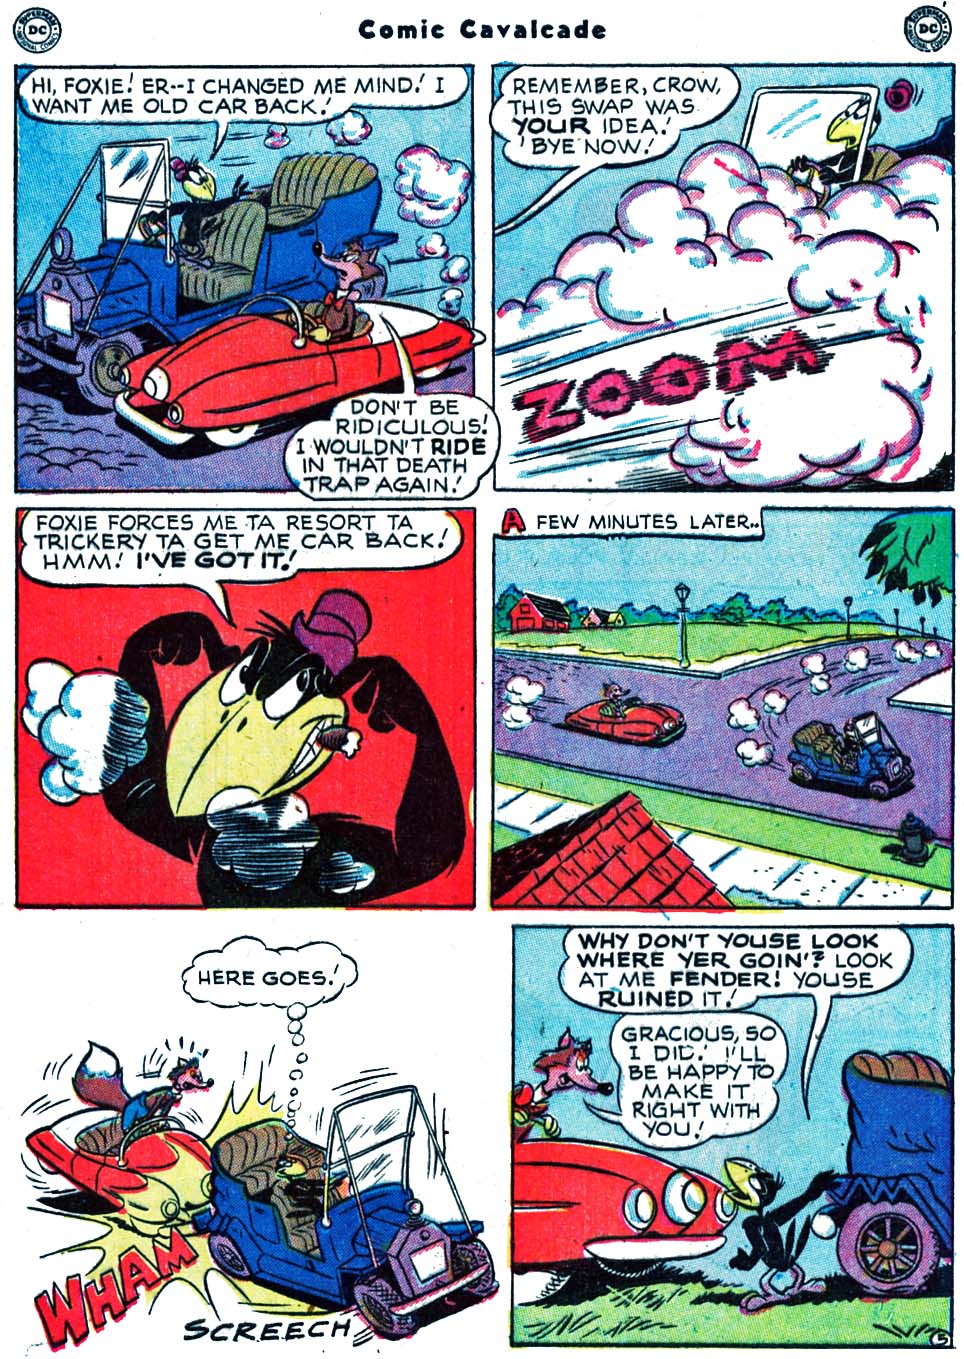 Comic Cavalcade issue 39 - Page 7